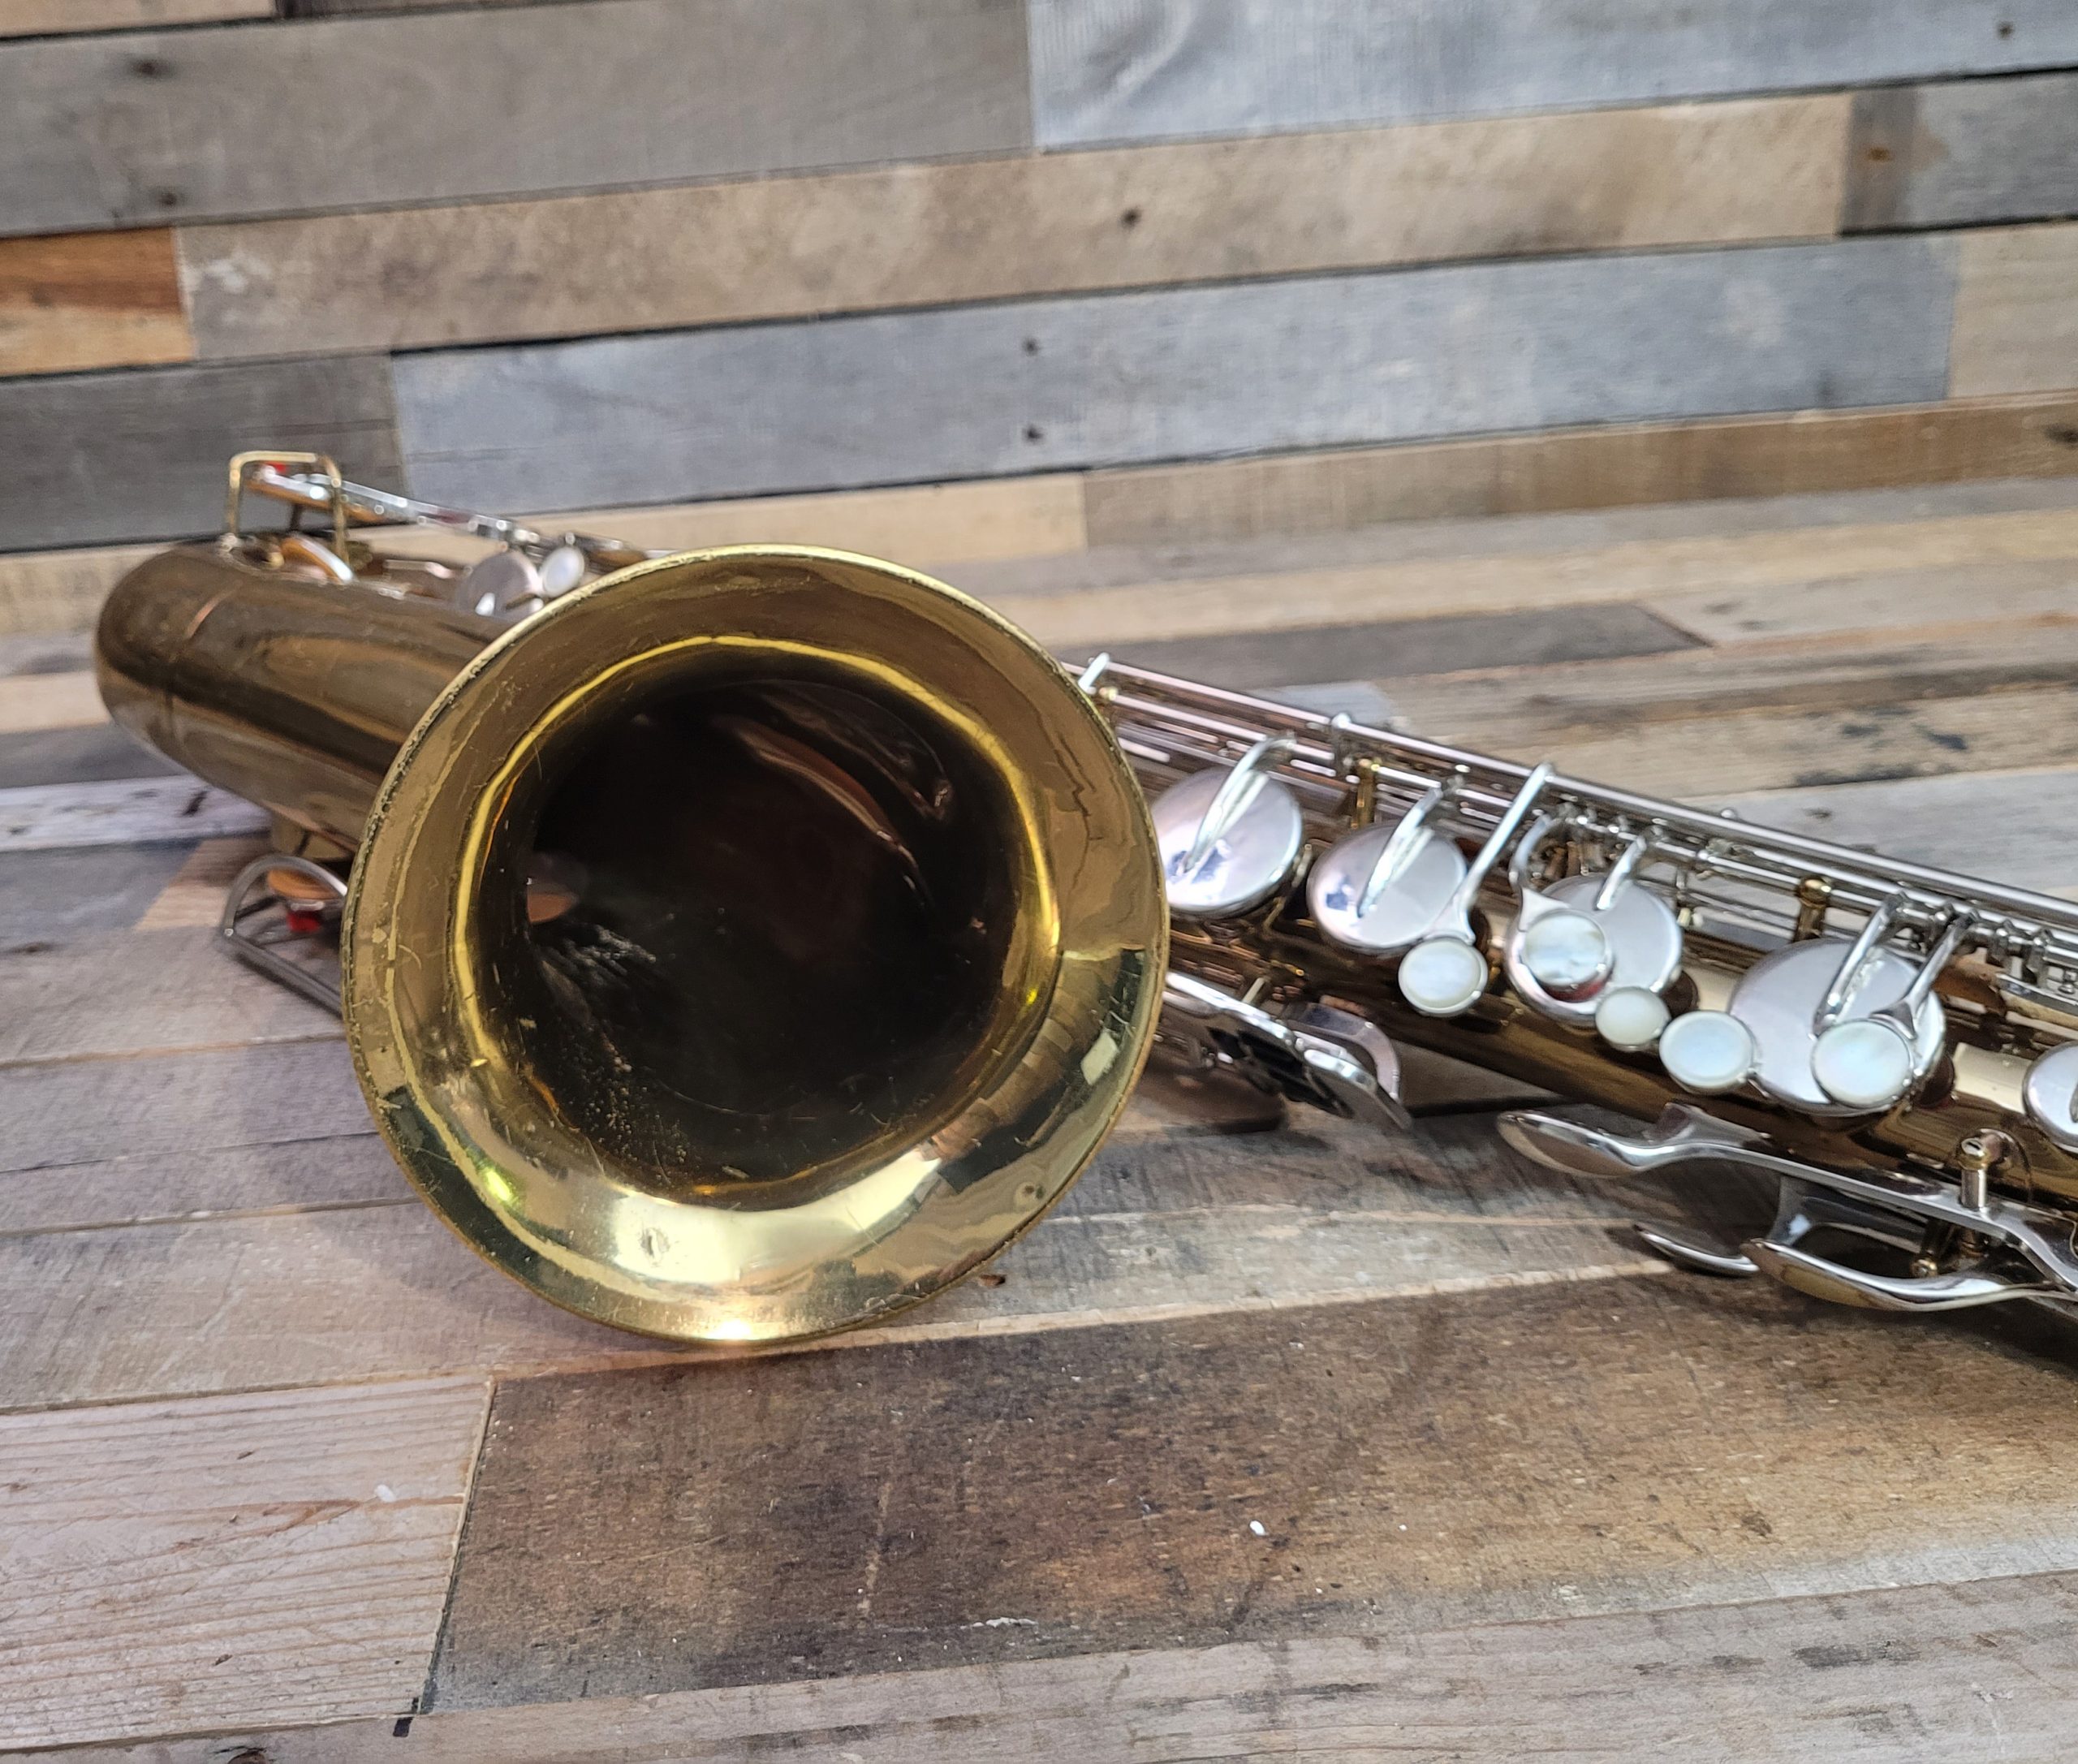 YAMAHA ADVANTAGE Series B-flat Student Model Tenor Saxophone - New Version